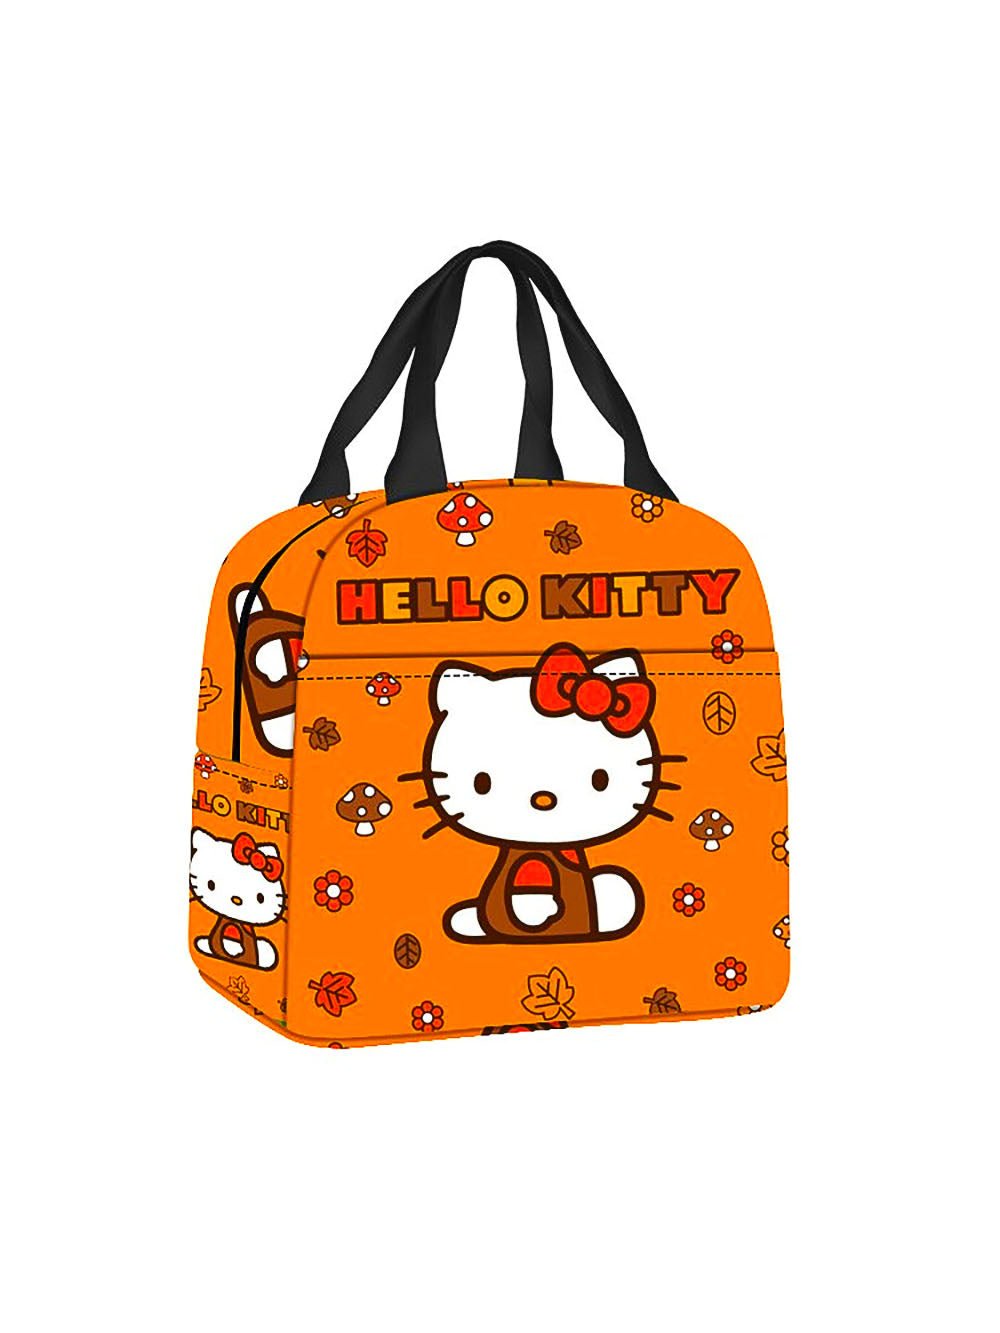 Hello Kitty Keep Going Tote Bag